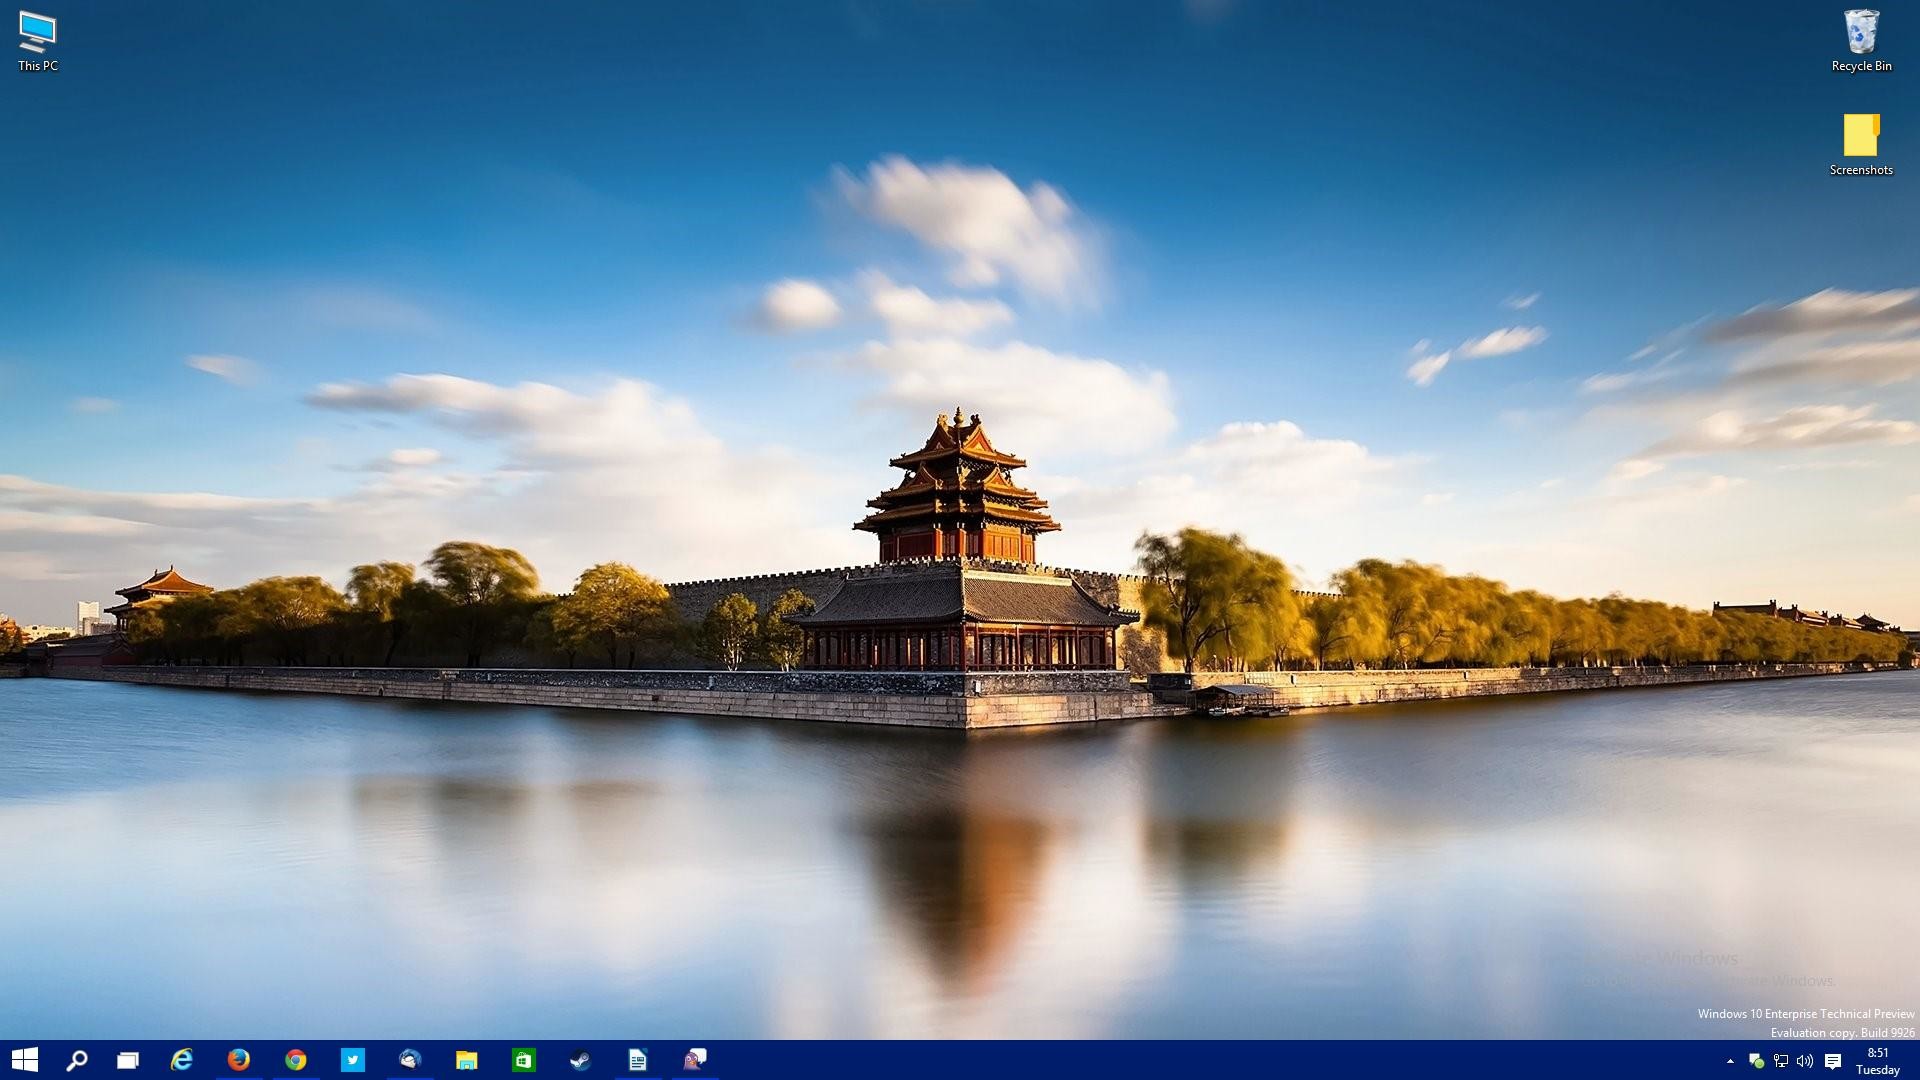 1920x1080 The Windows 10 desktop in build 9926